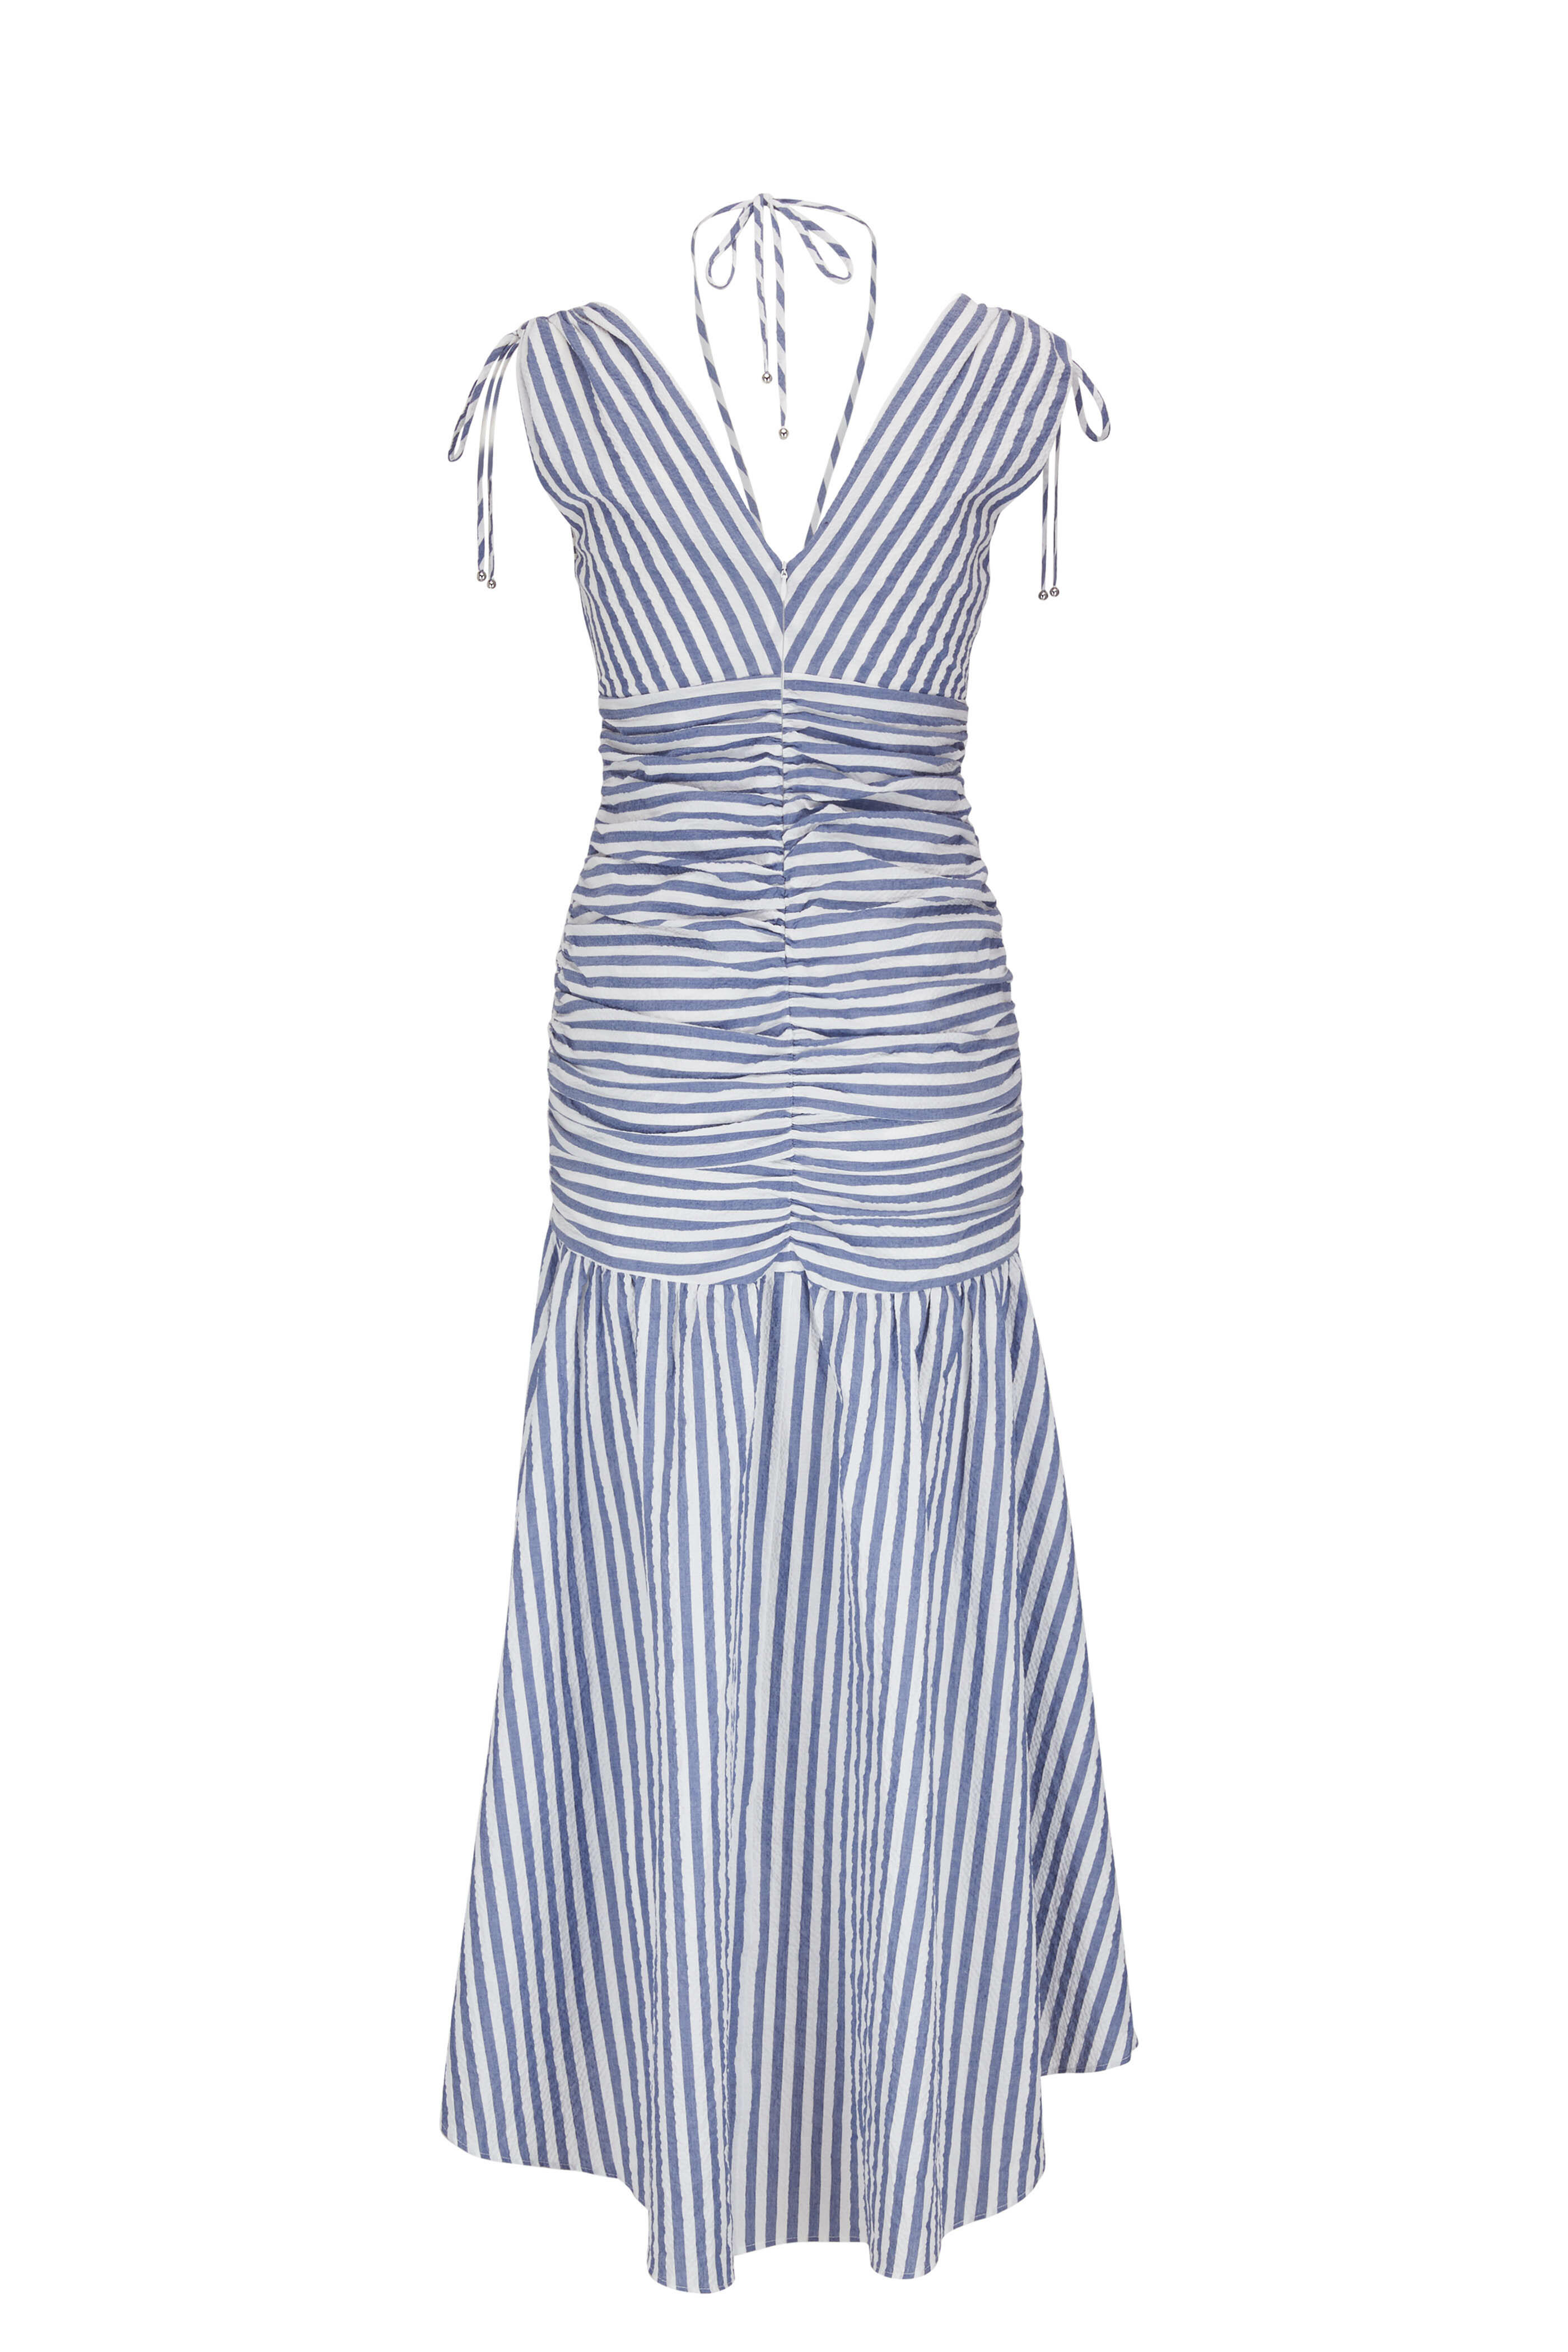 Veronica Beard - Perrin Blue & White Striped Seersucker Maxi Dress